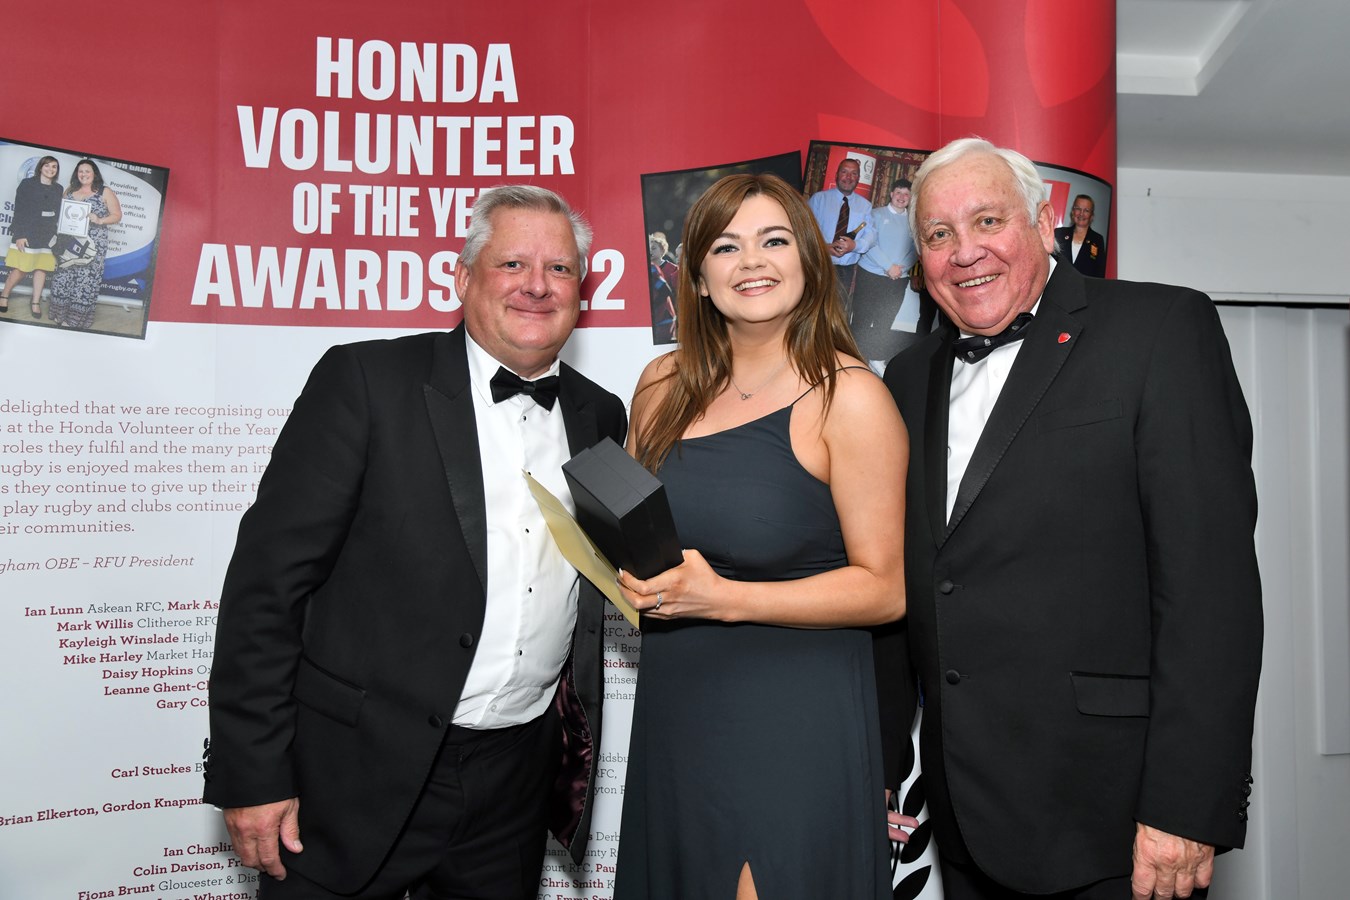 Honda Volunteer of the Year Awards - Steve Morris - Honda UK Head of Power Products, Jodie Hill - Award Winner, Rob Briers - RFU Vice President